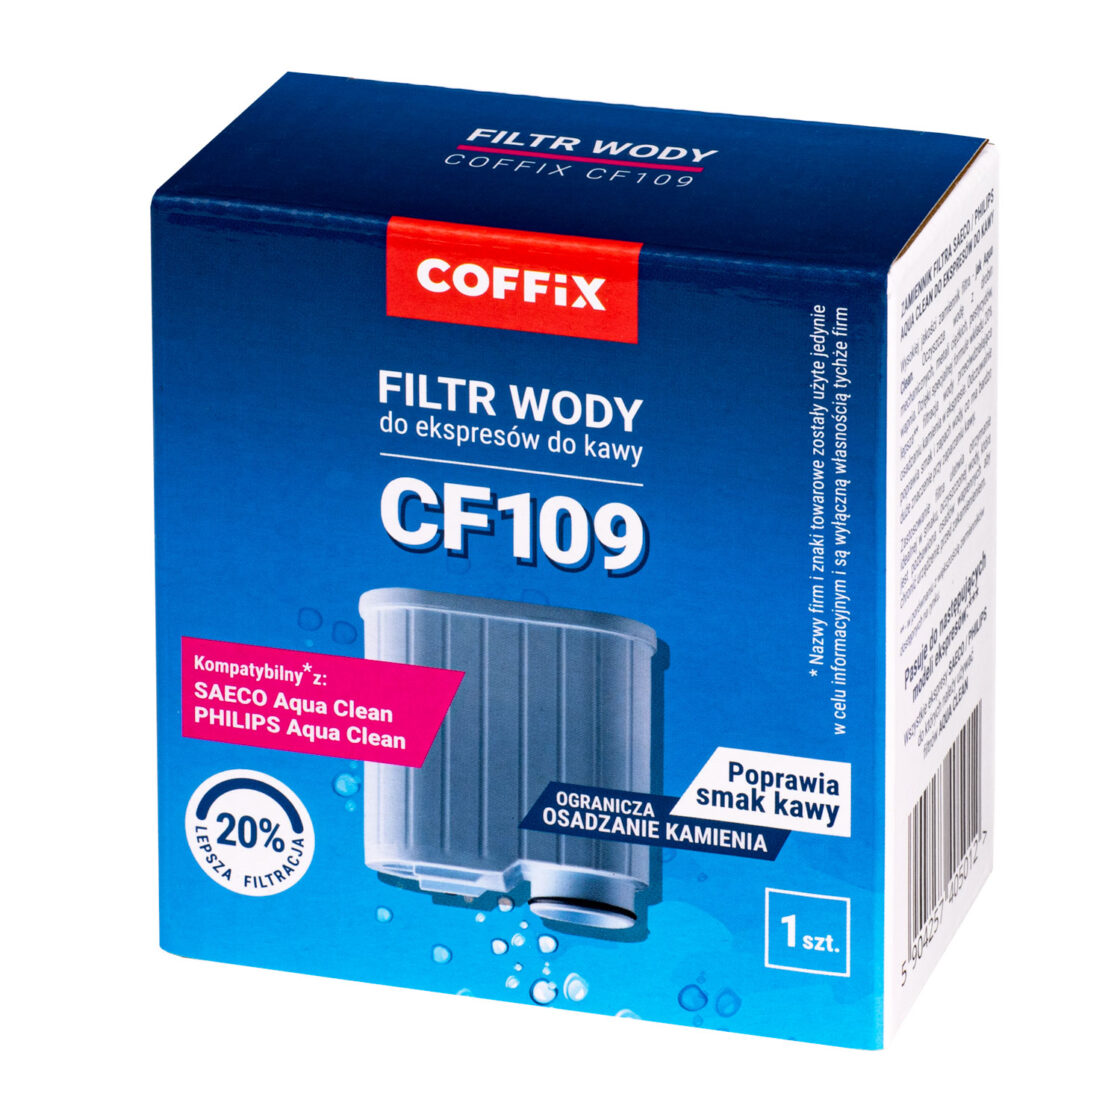 Filtr do ekspresu Philips / Saeco AquaClean (zamiennik) – COFFIX CF109